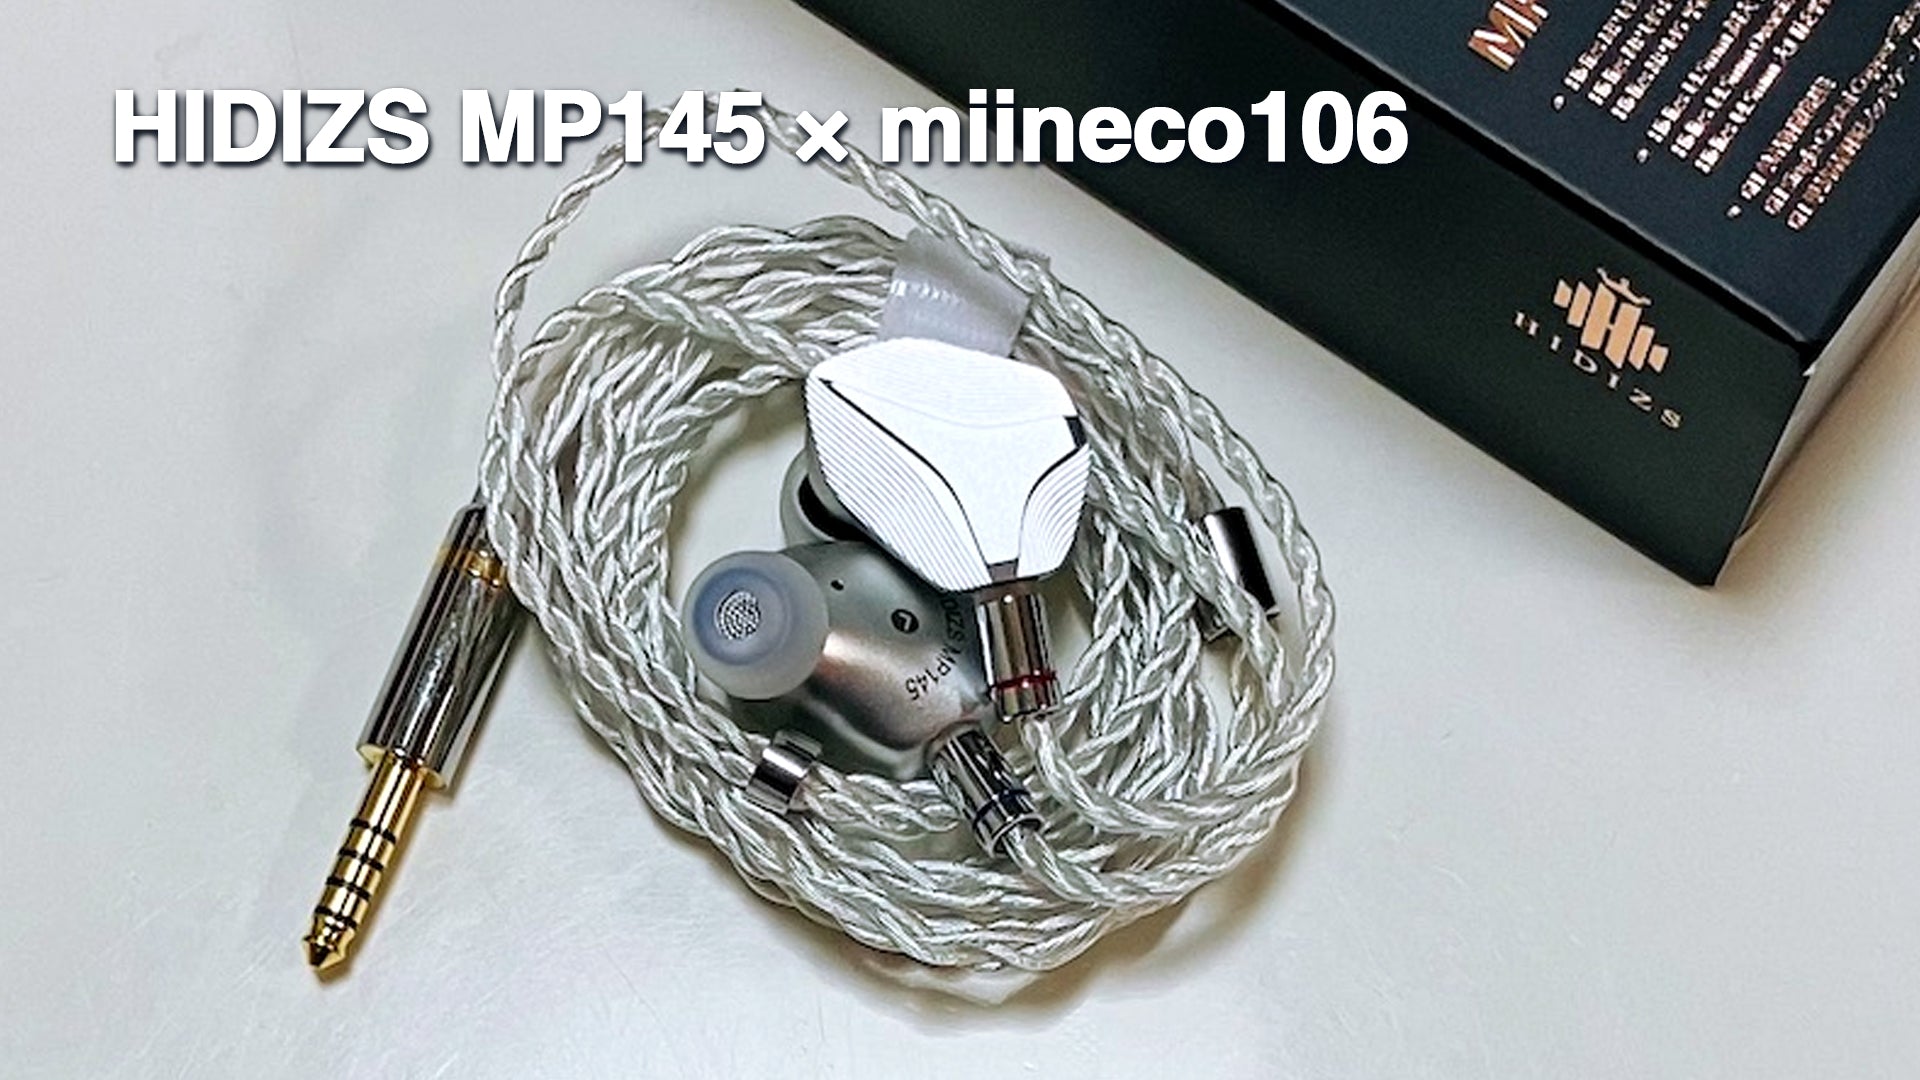 HIDIZS MP145 Review - miineco106